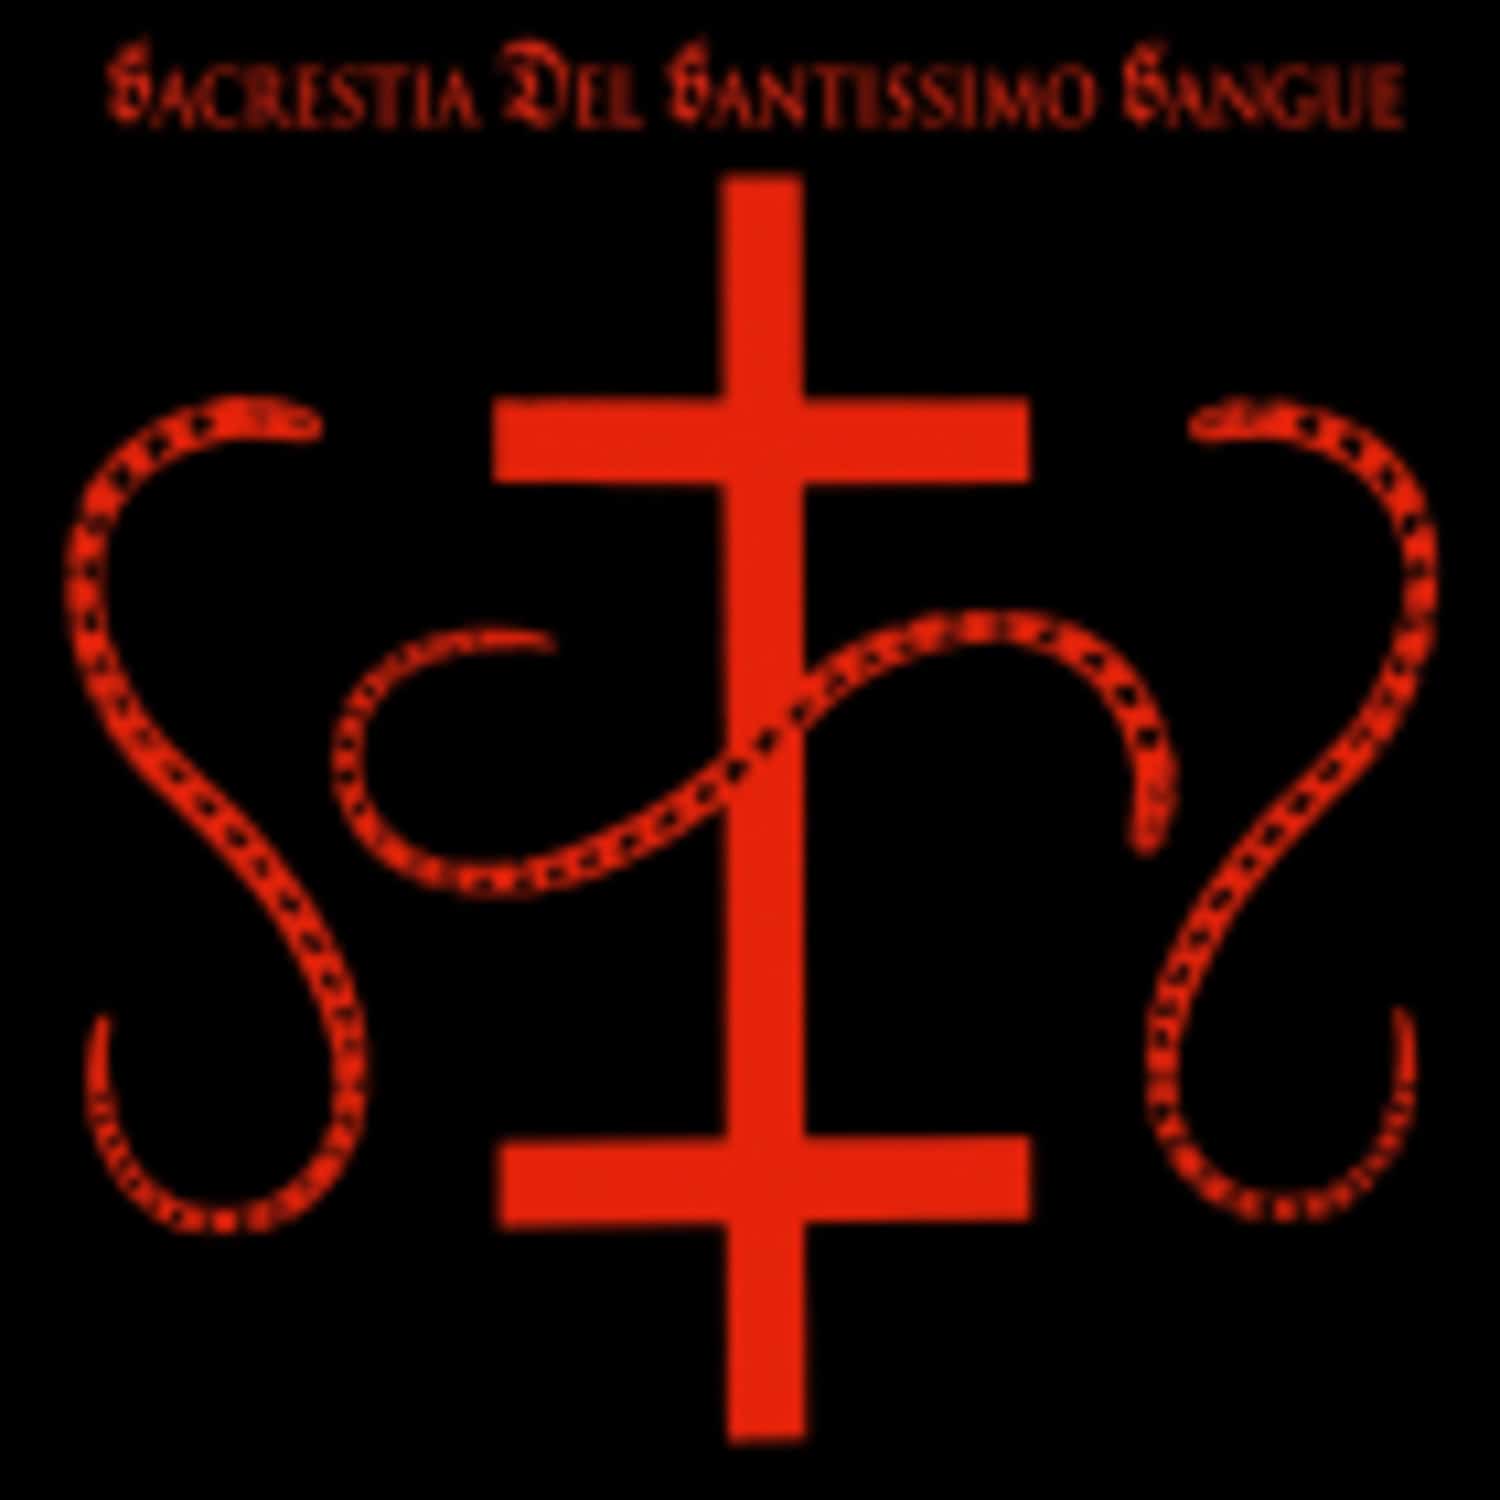 Sacrestia Del Santissimo Sangue - REAL ITALIAN OCCULT TERRORISM 